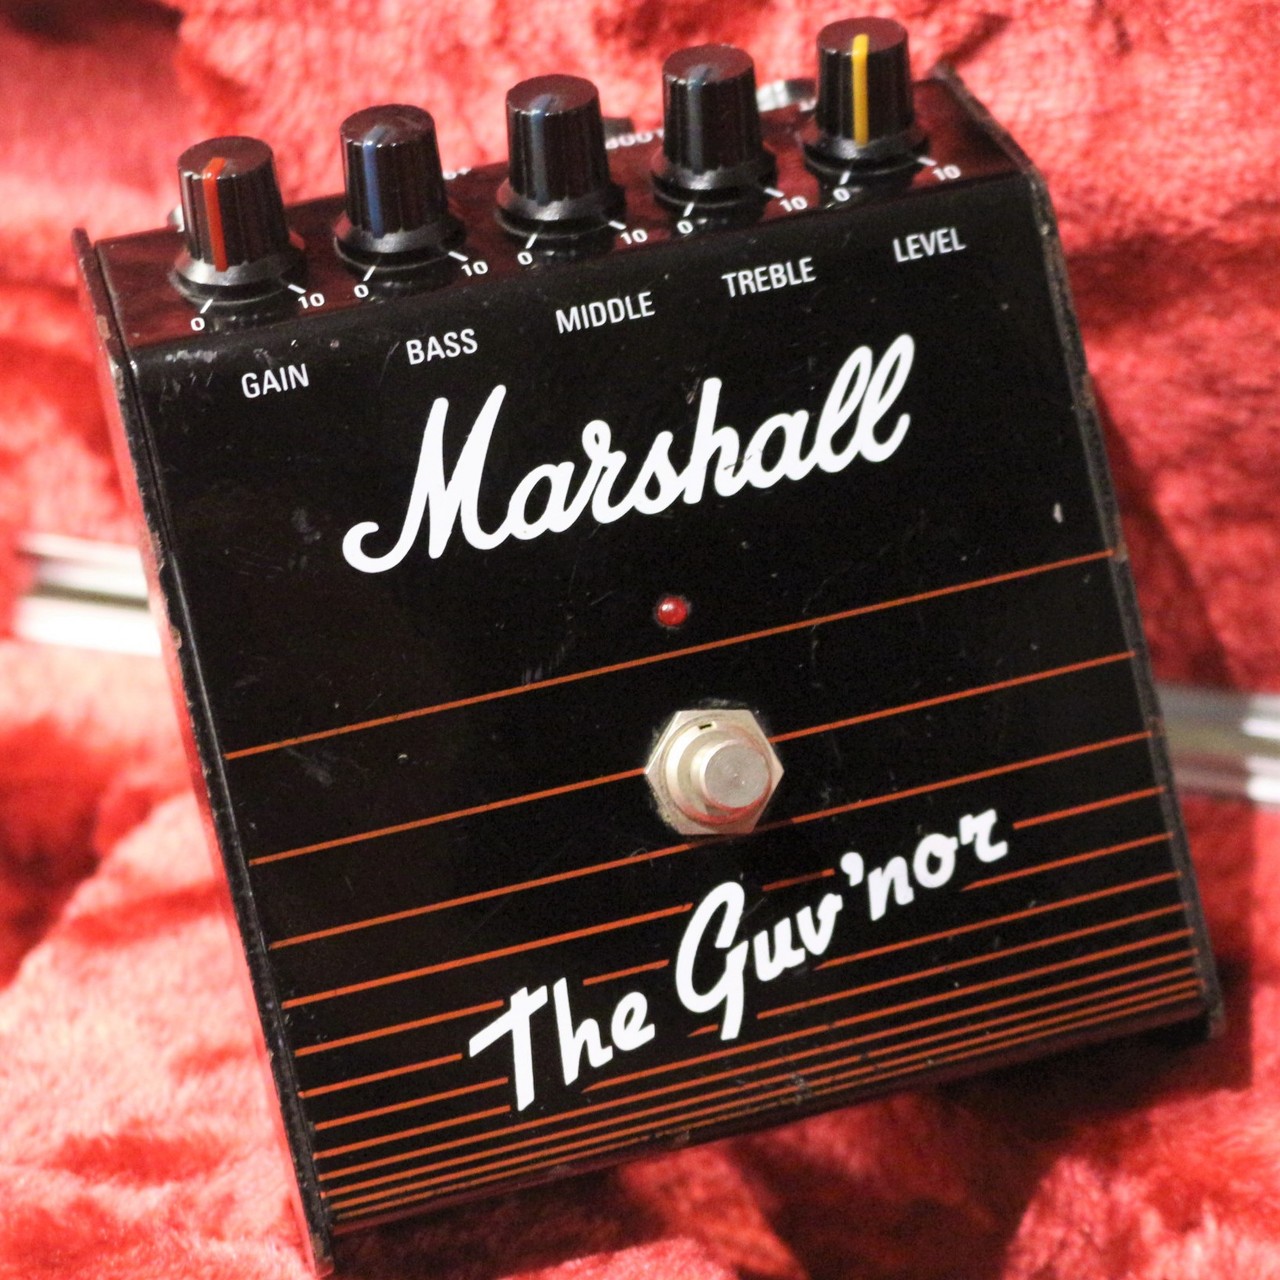 Marshall The Guv’Nor (ガバナー、韓国製)